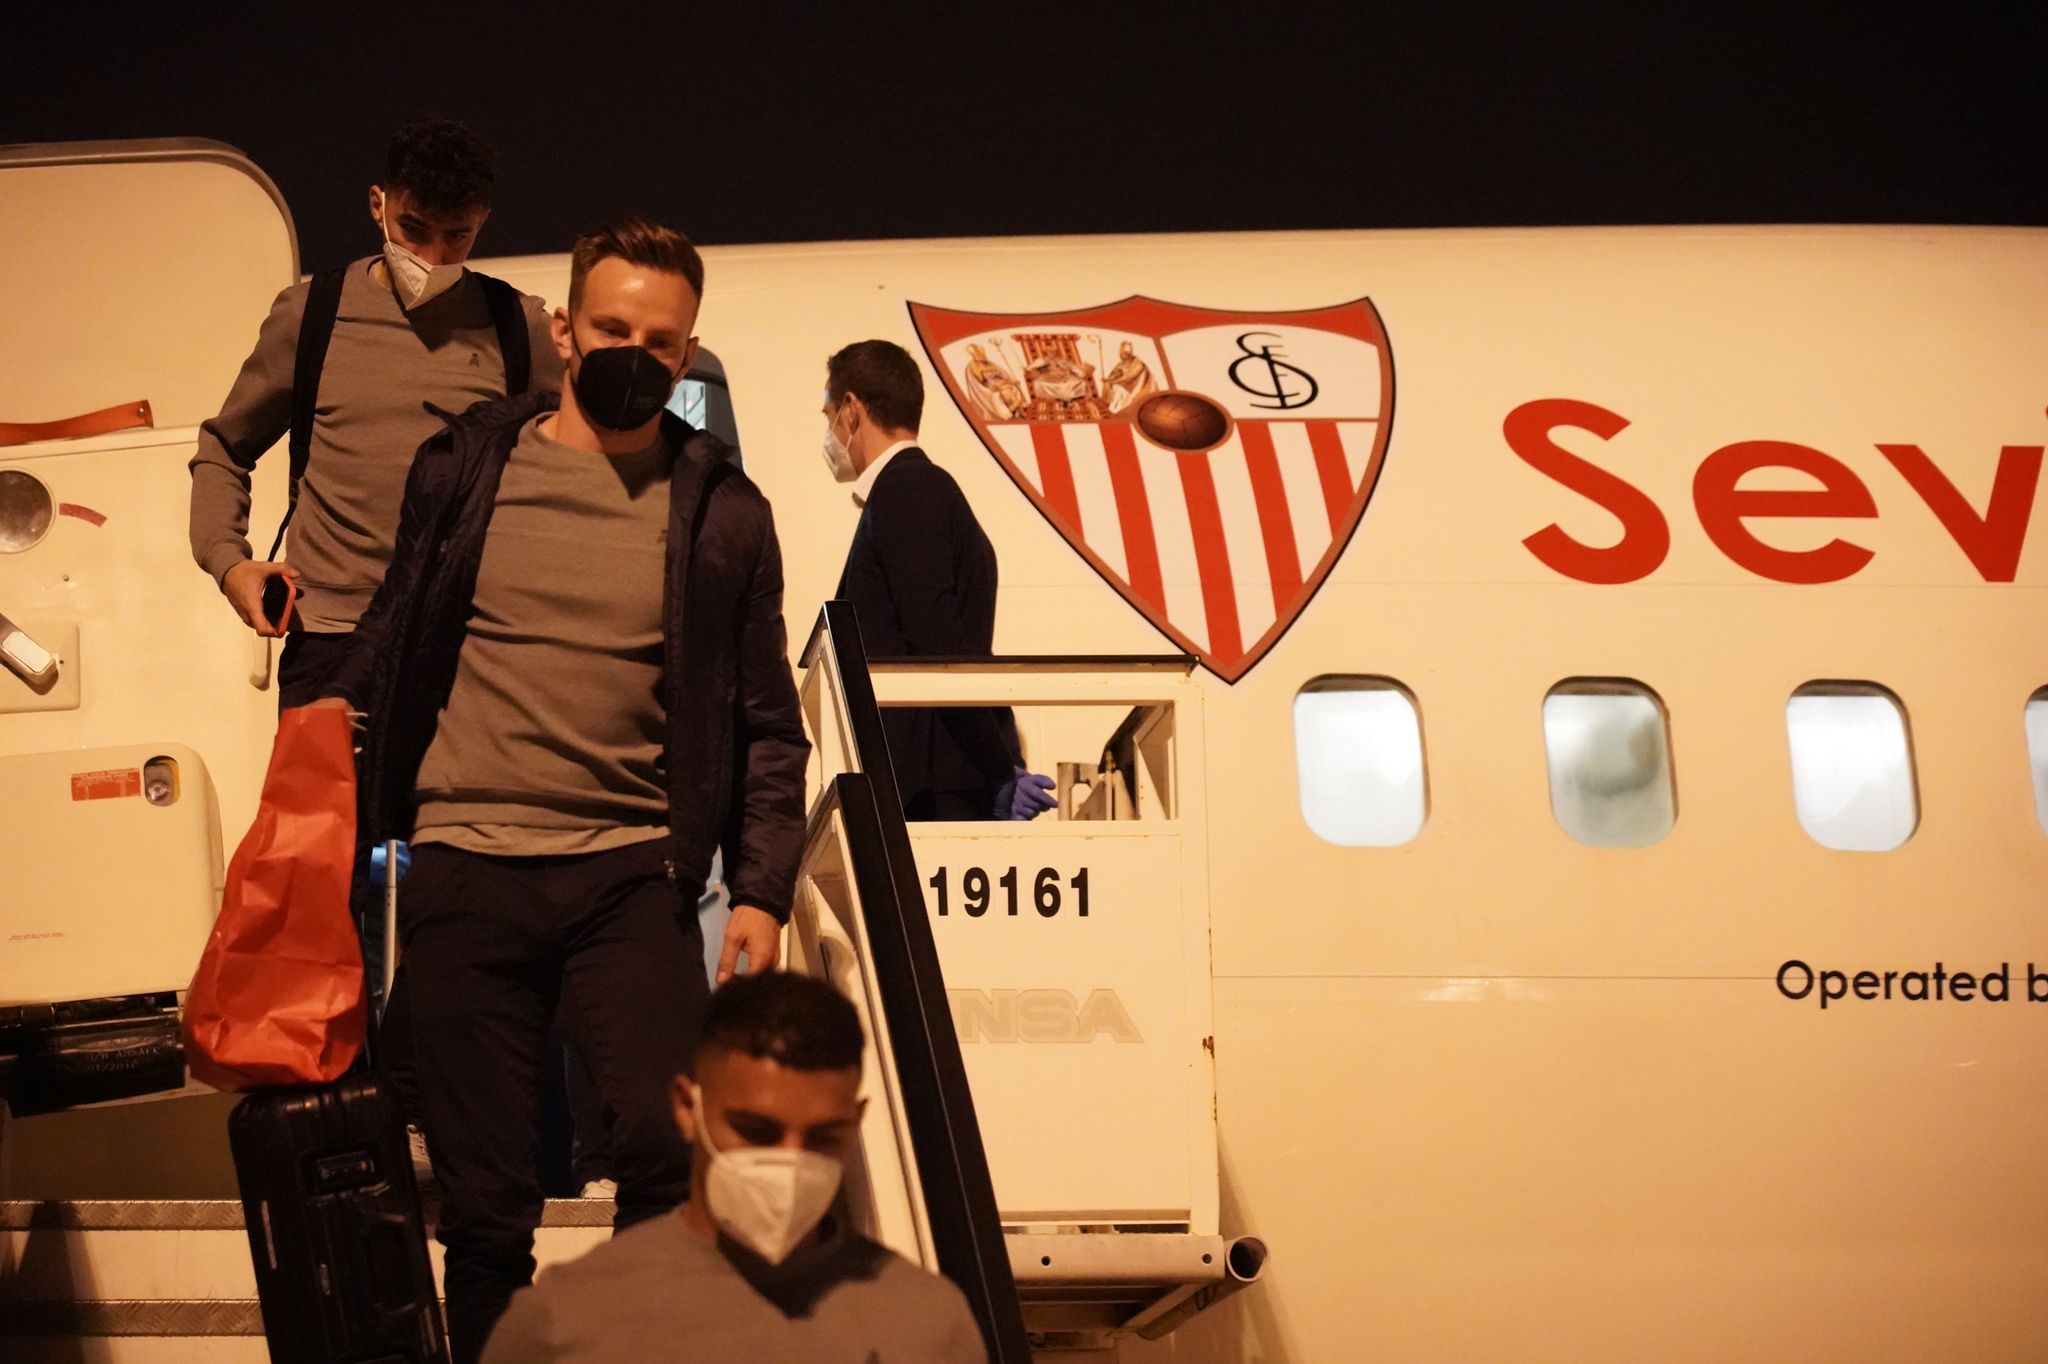 Sevilla FC arriving in Barcelona